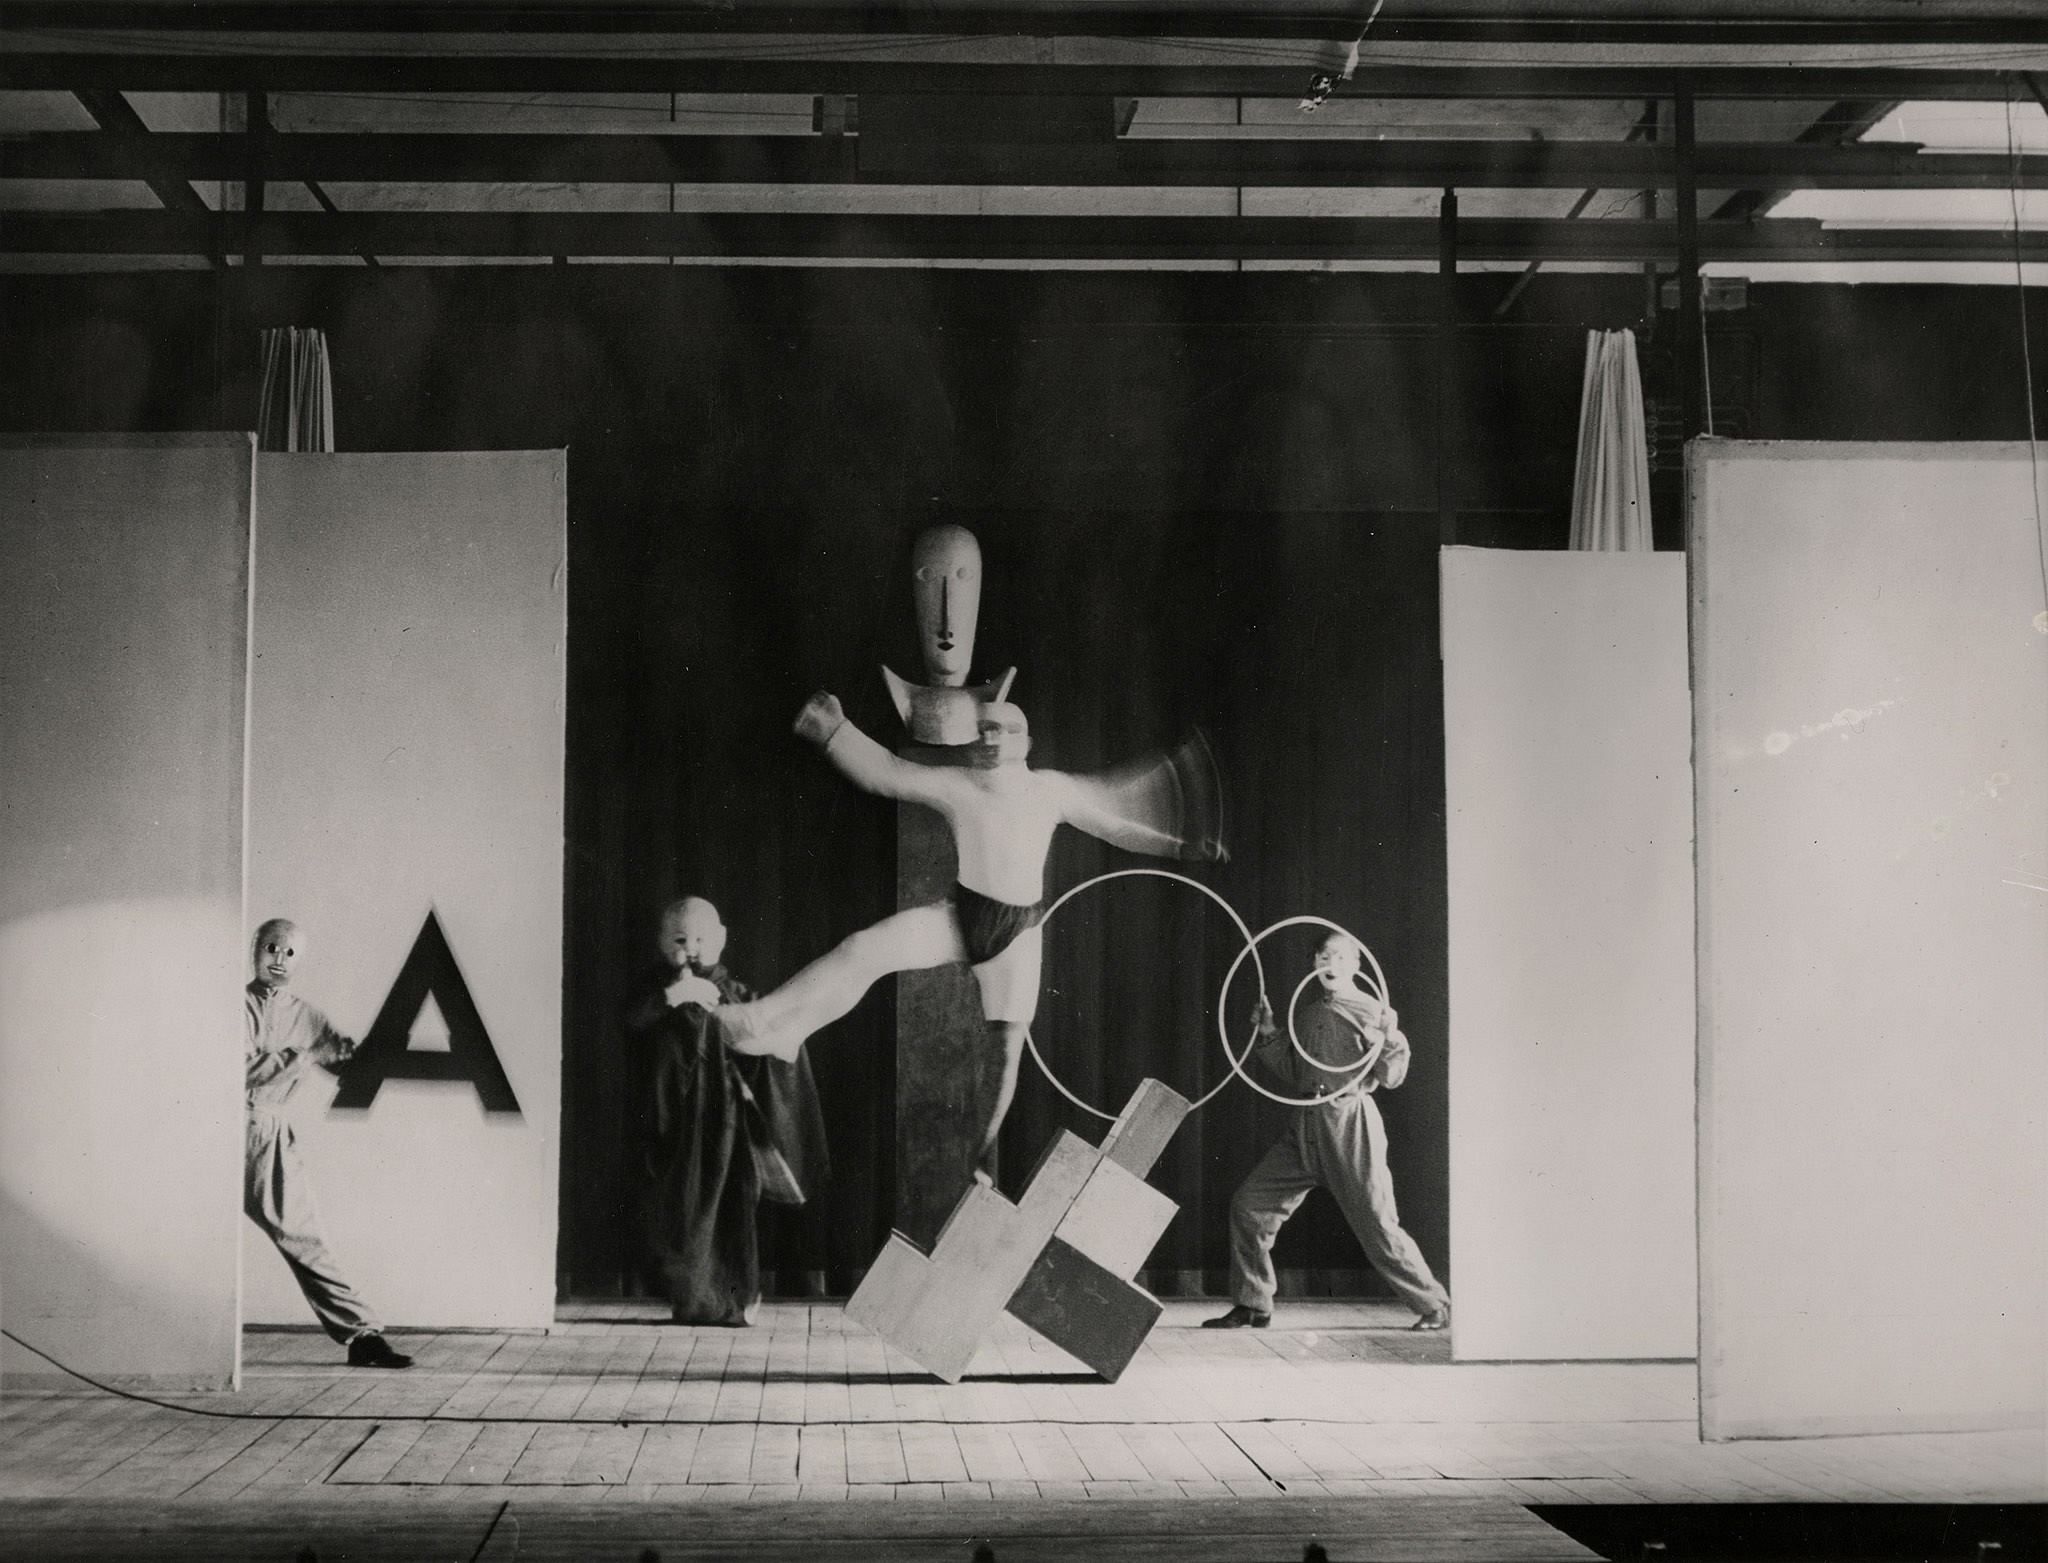 Irene Bayer, Bauhaus Stage (Oscar Schlemmer costumes), 1927